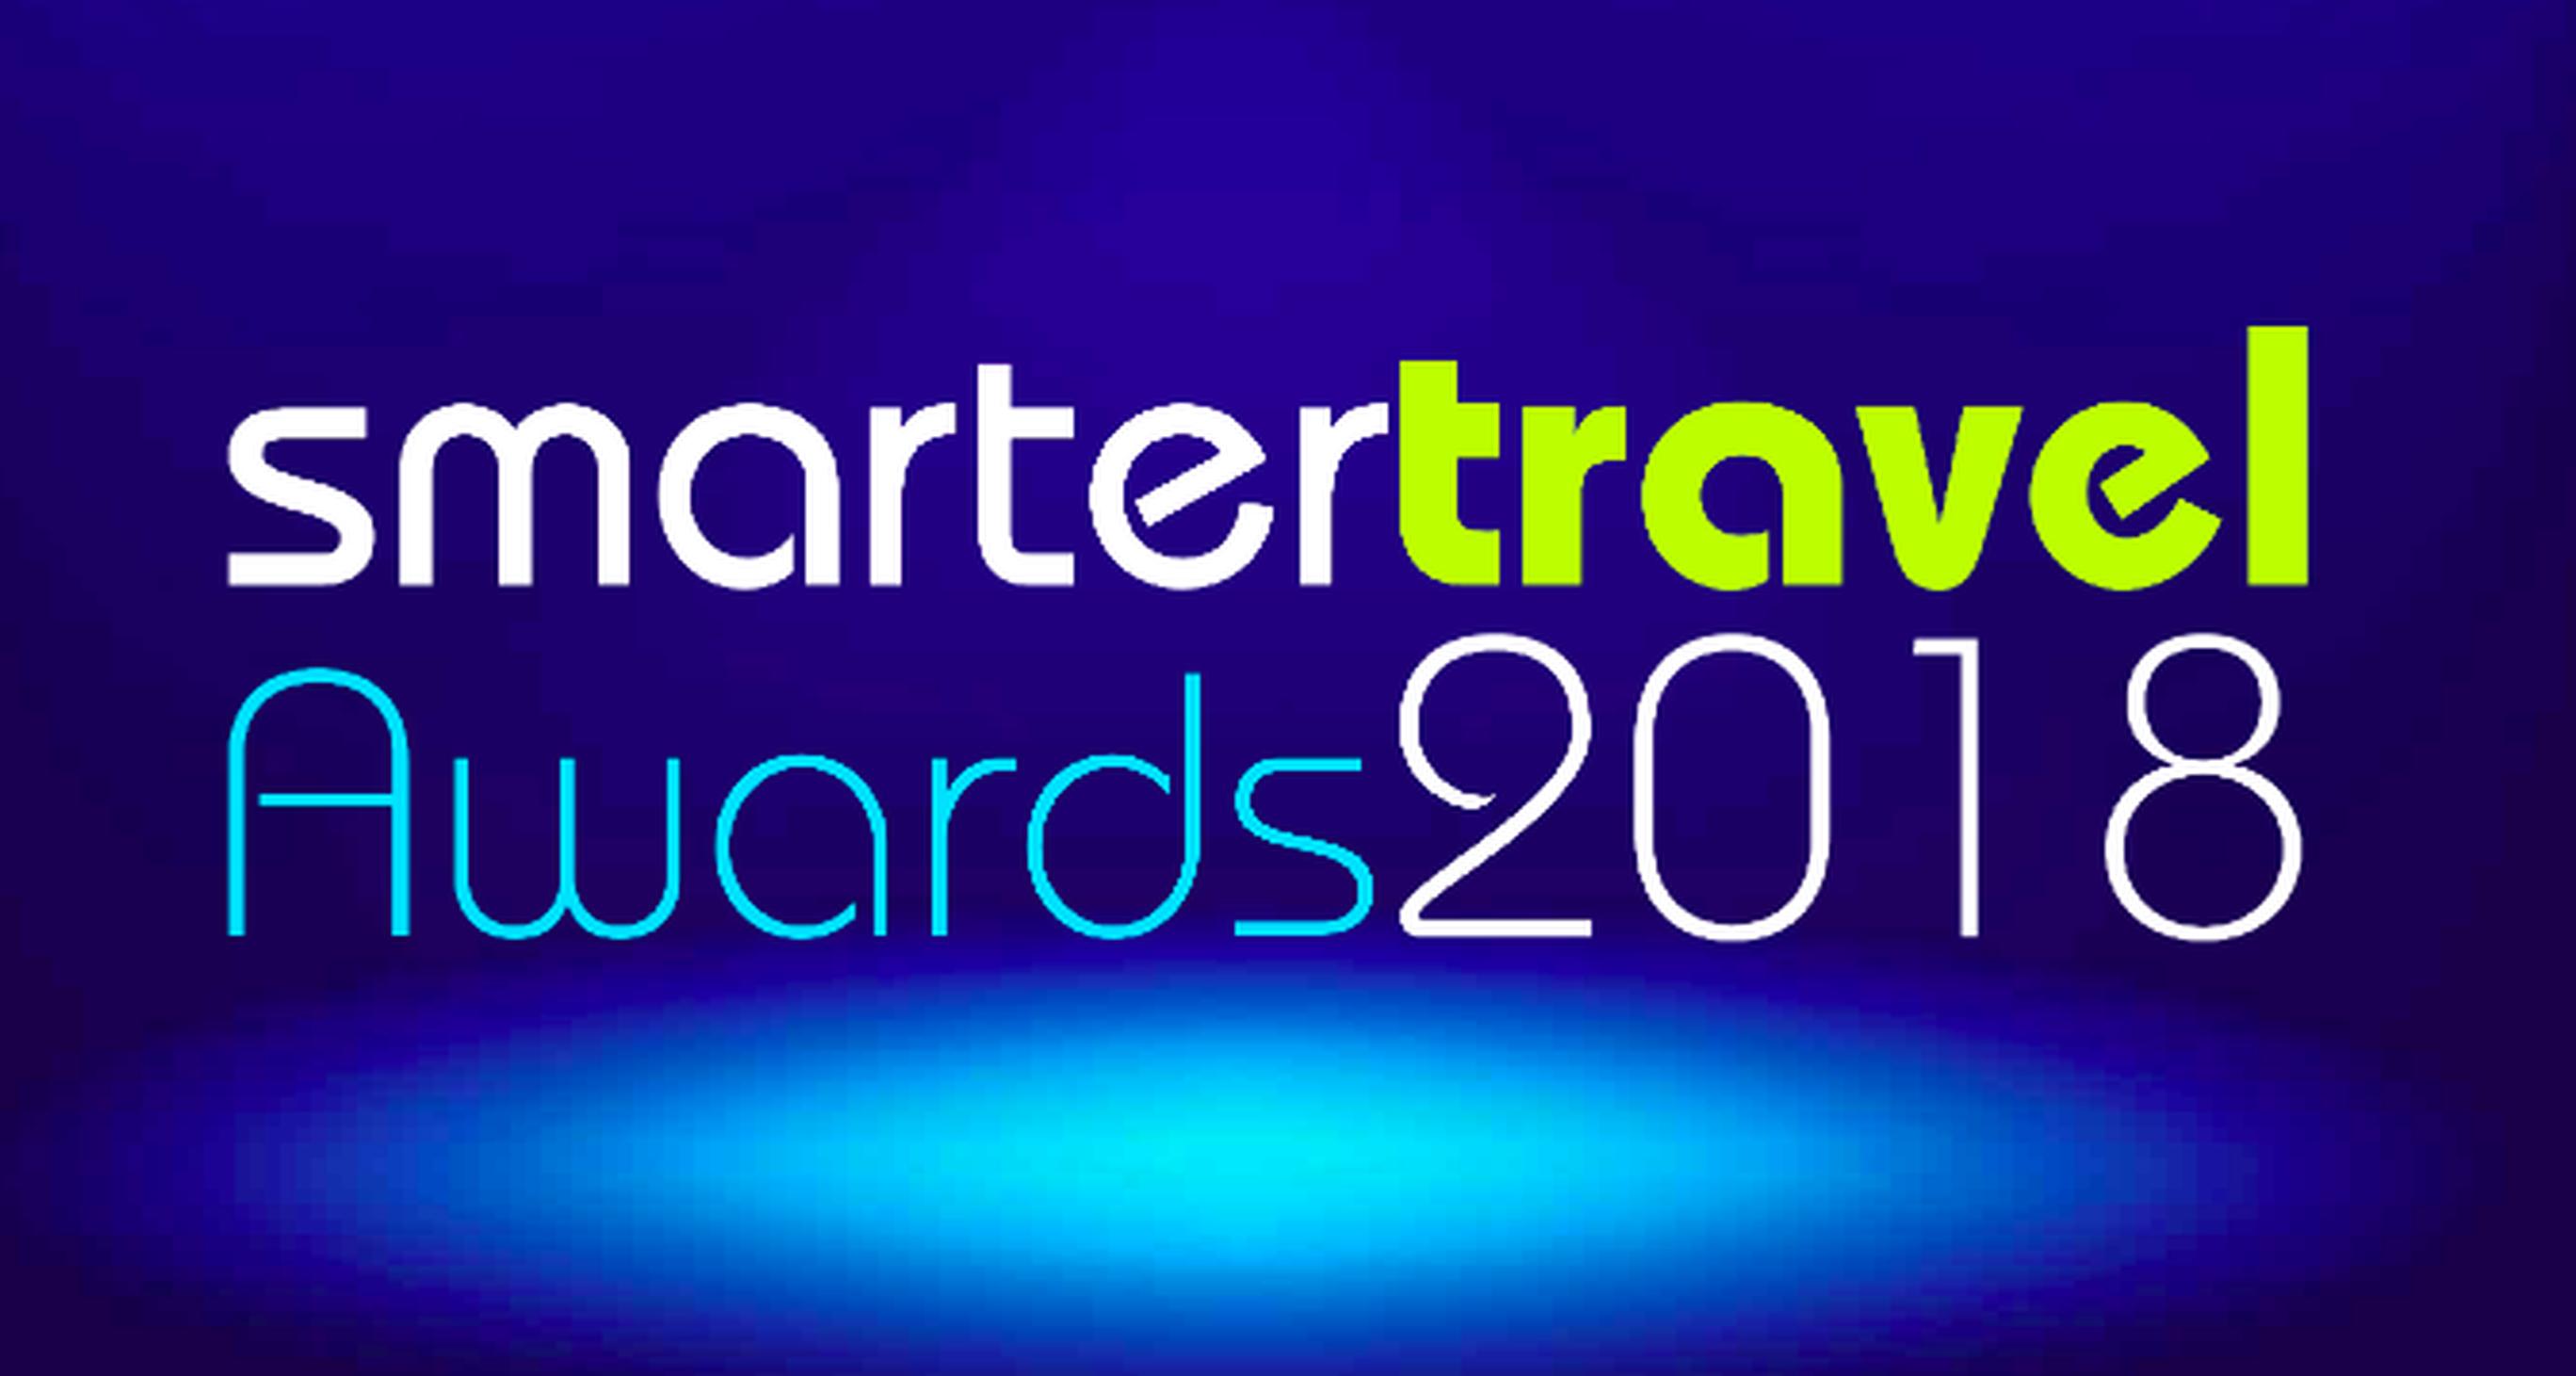 smarter travel awards